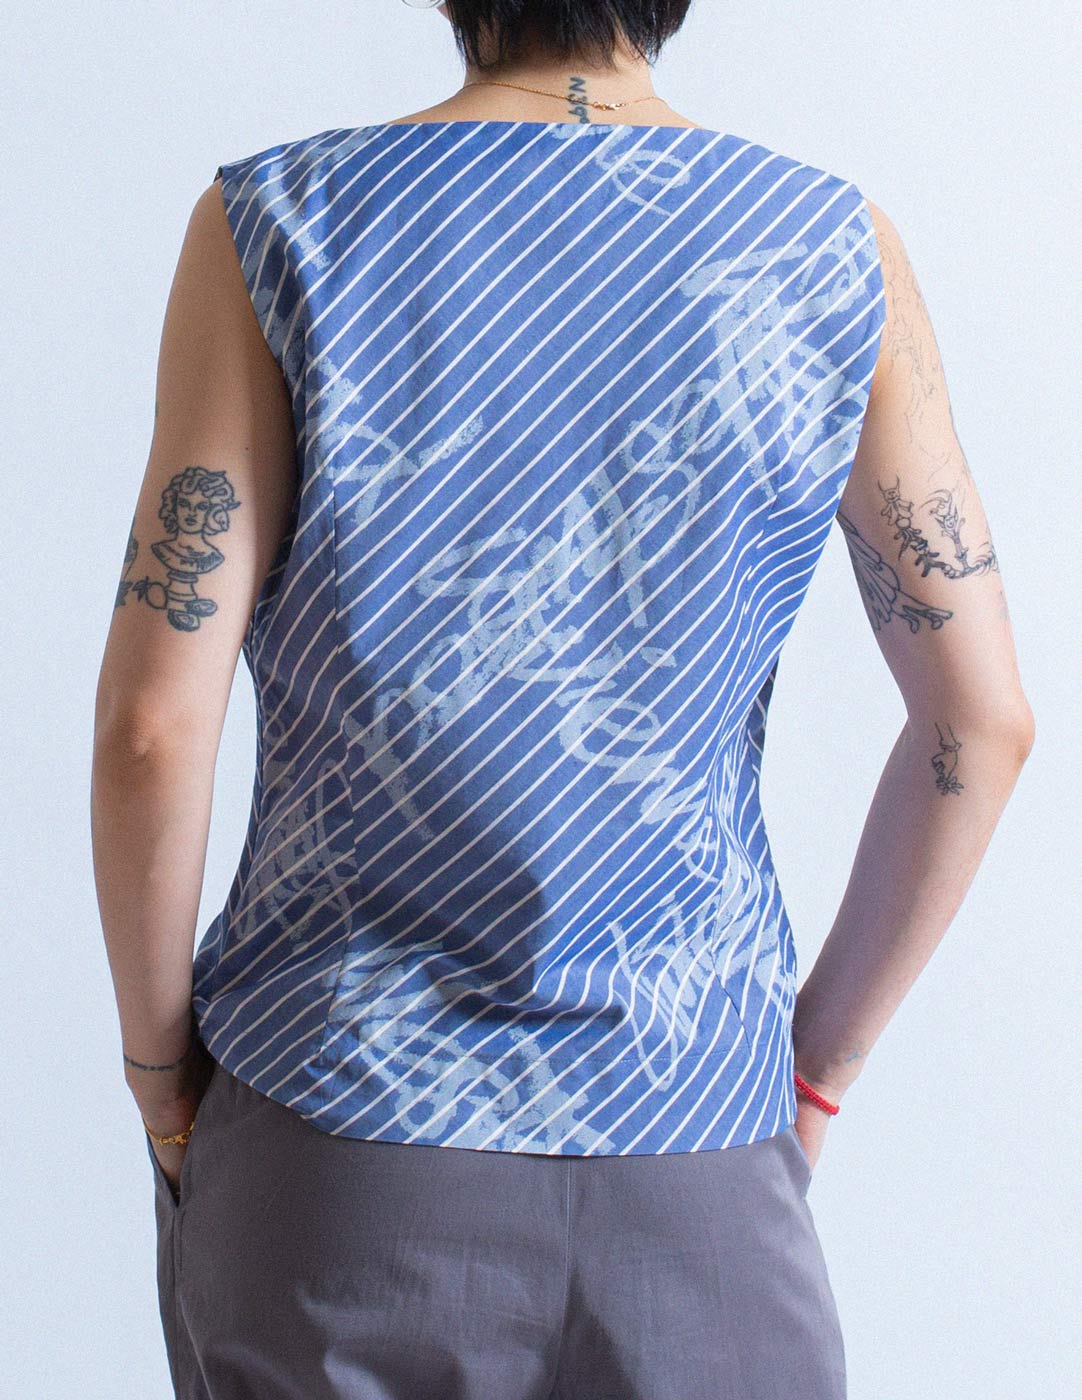 Vivienne Westwood diagonally striped cotton top back detail